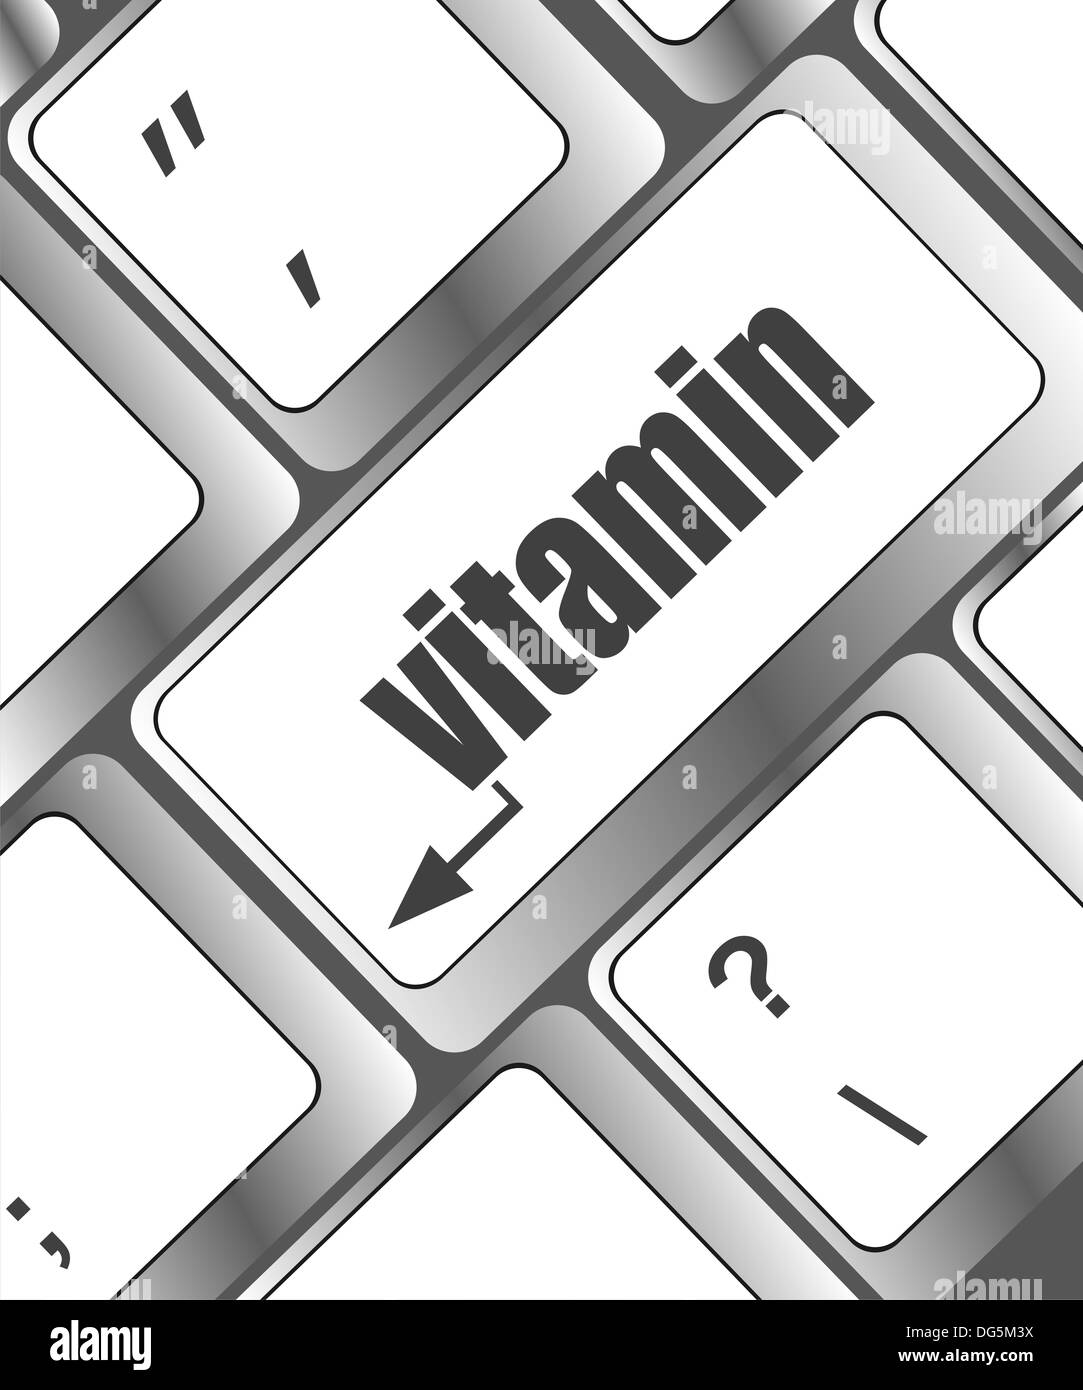 vitamin word on computer keyboard pc Stock Photo